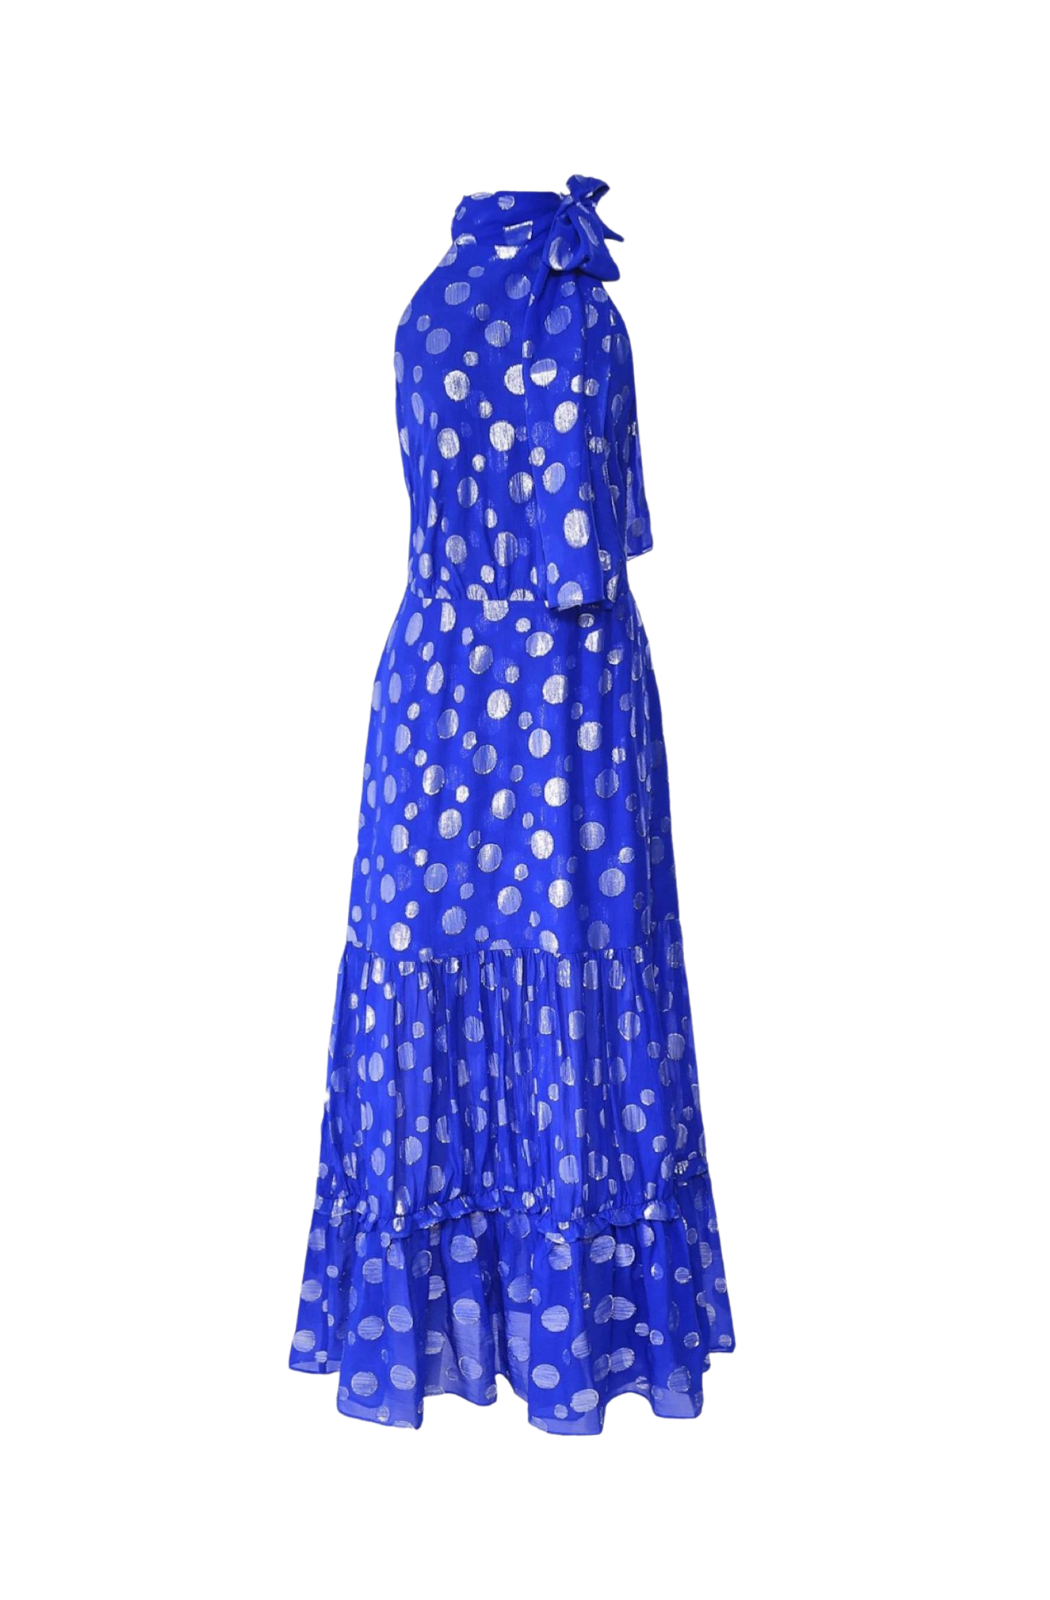 Eleanor Dress - Blue Polka Dot